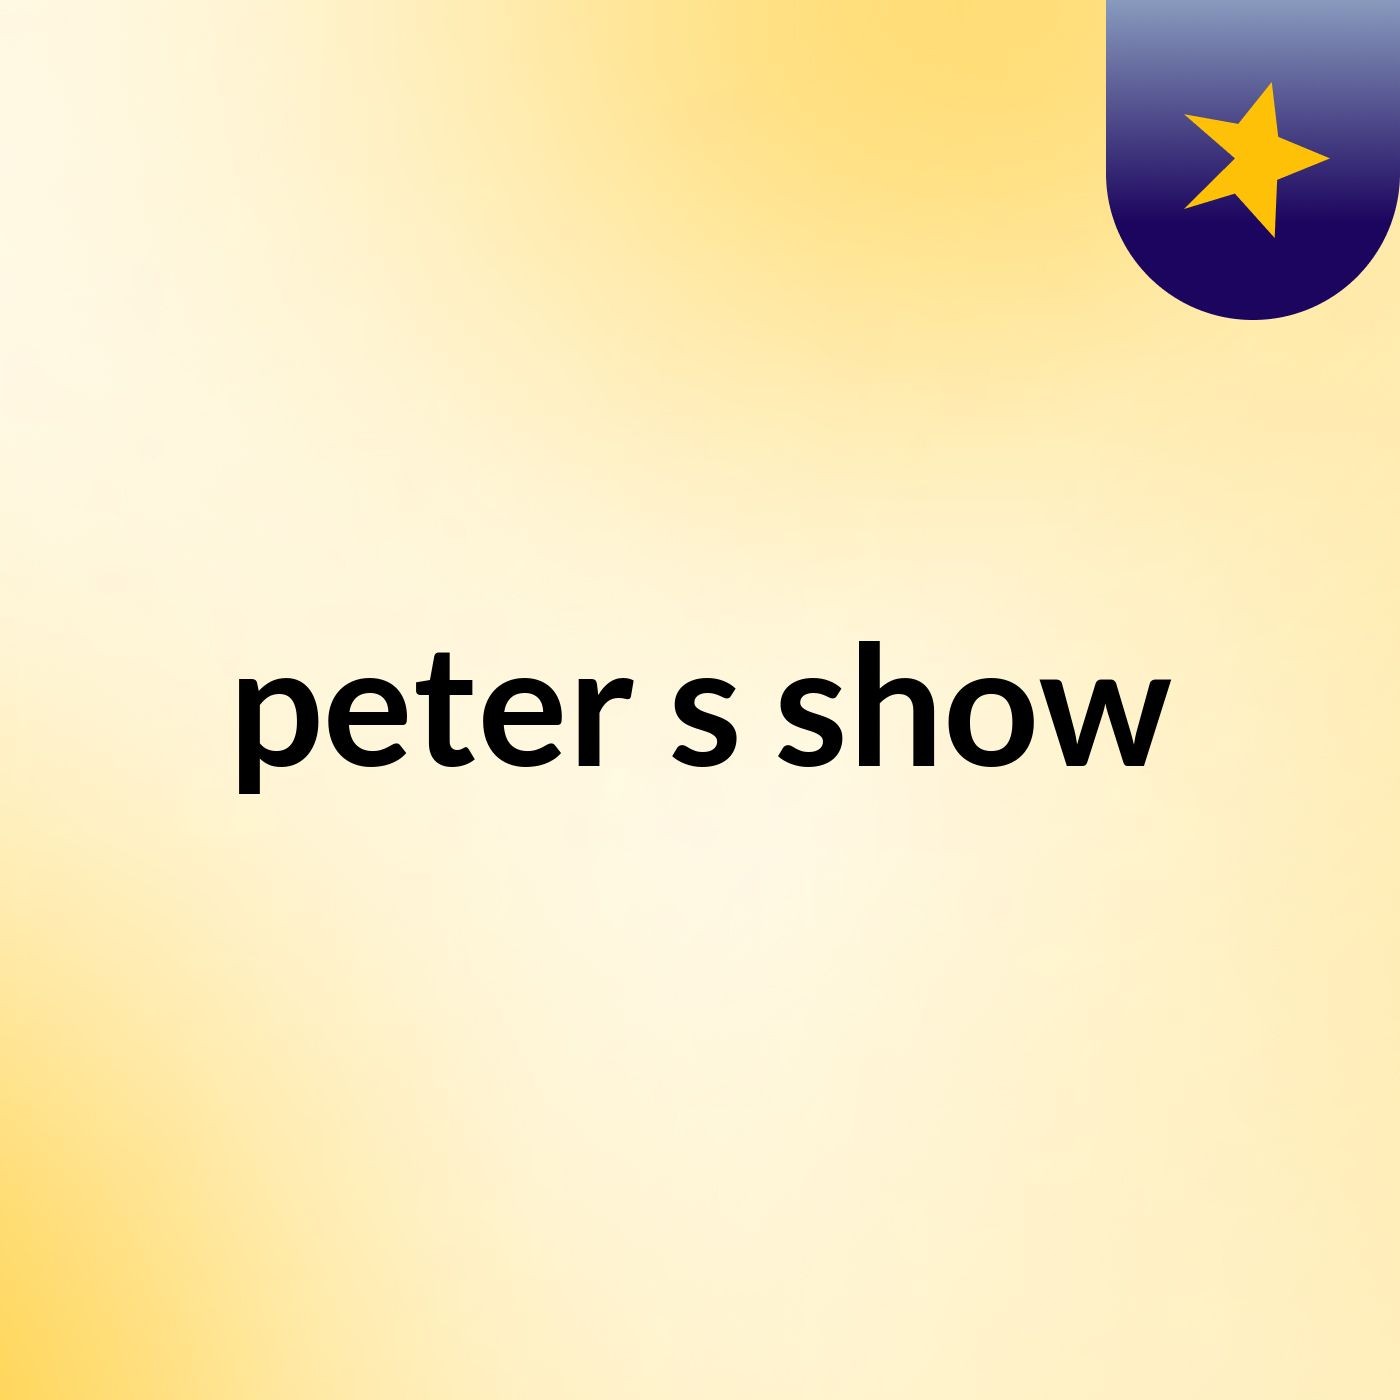 peter's show